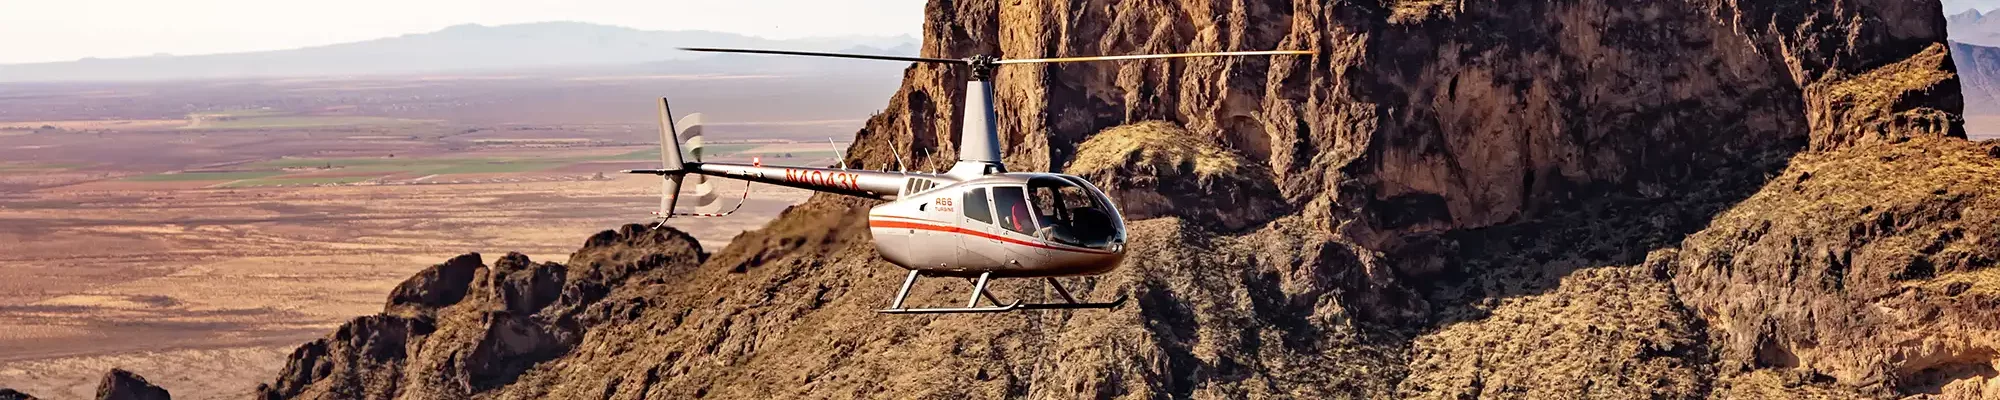 helicopter flying in Arizona